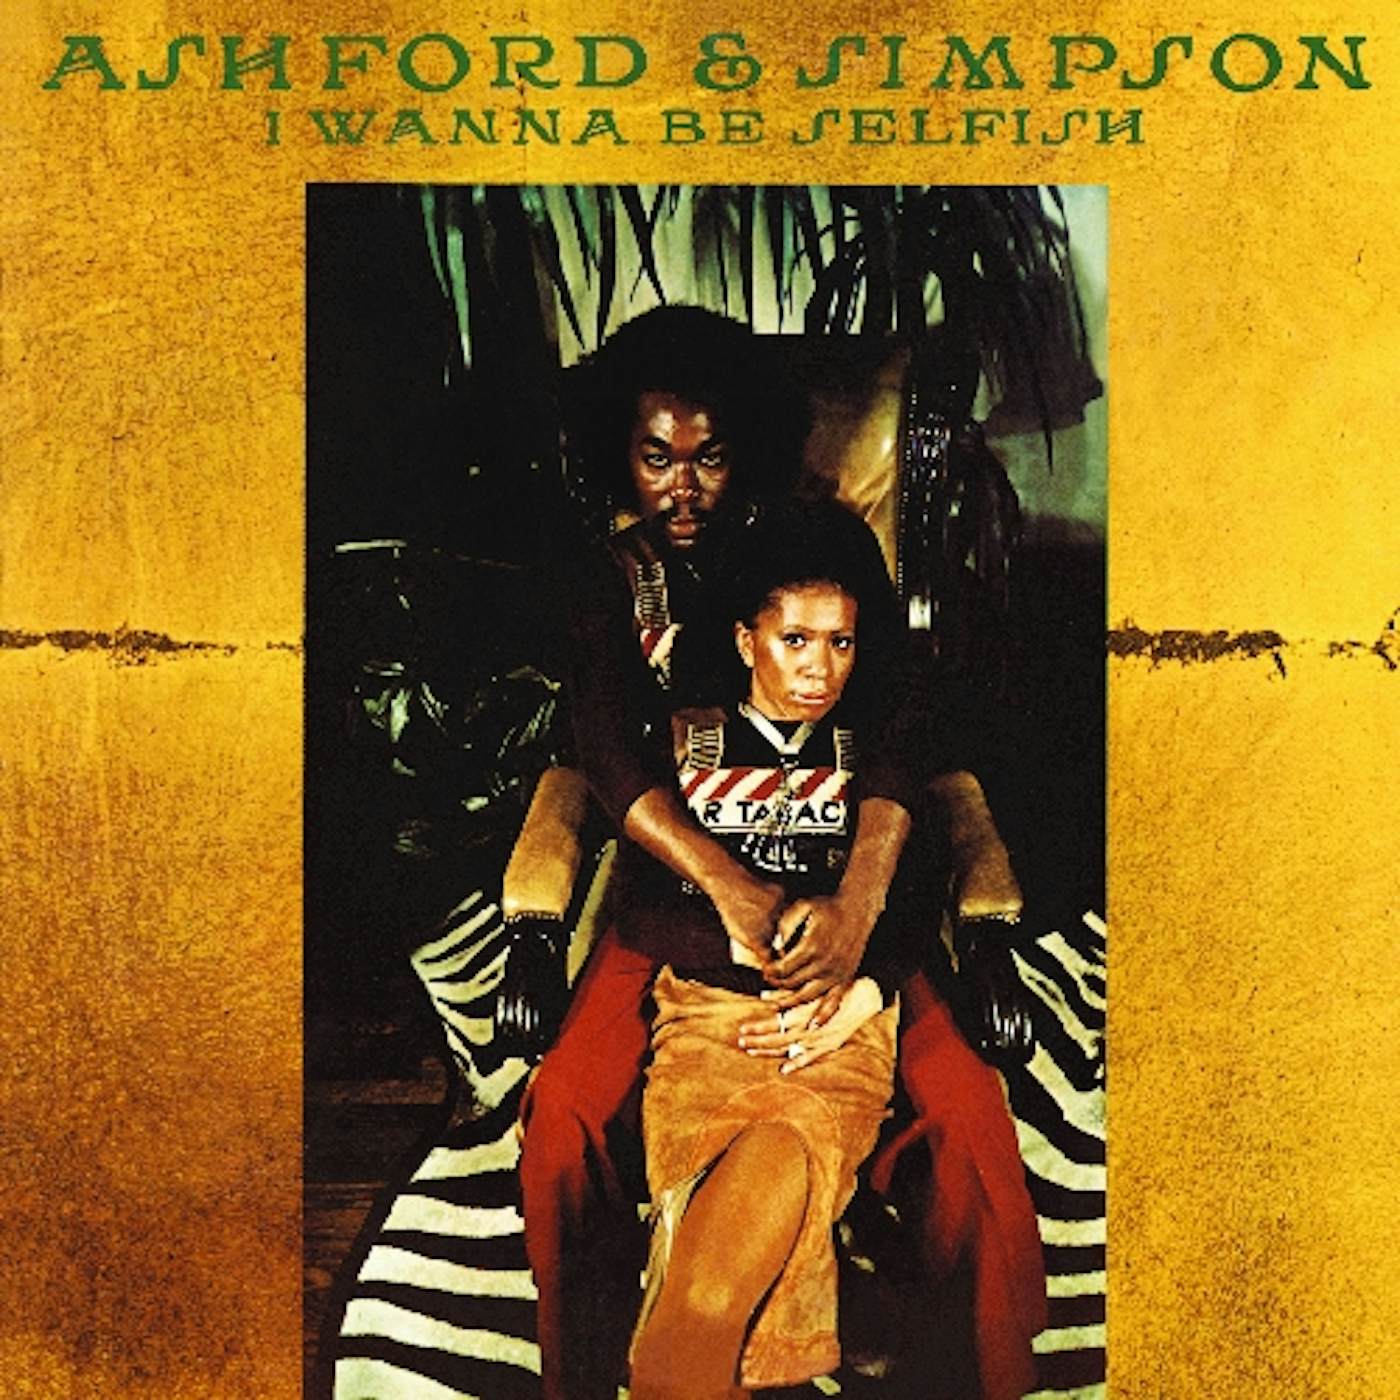 Ashford & Simpson I WANNA BE SELFISH CD